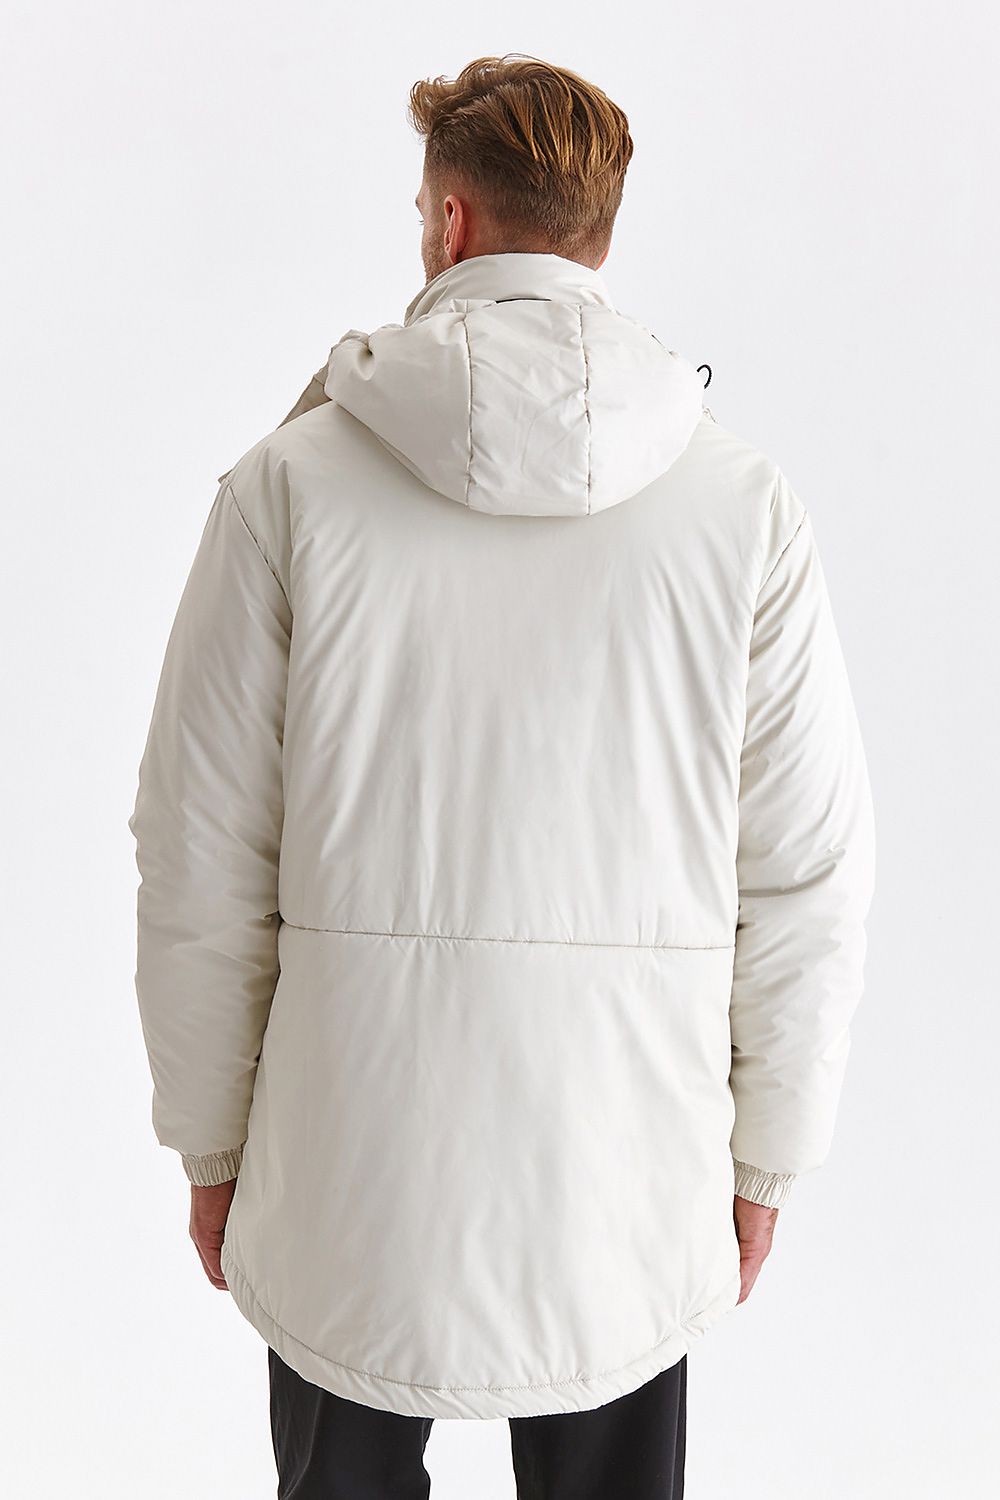 TEEK - Mens Thick Pocketed Hooded Coat Jacket COAT TEEK MH   